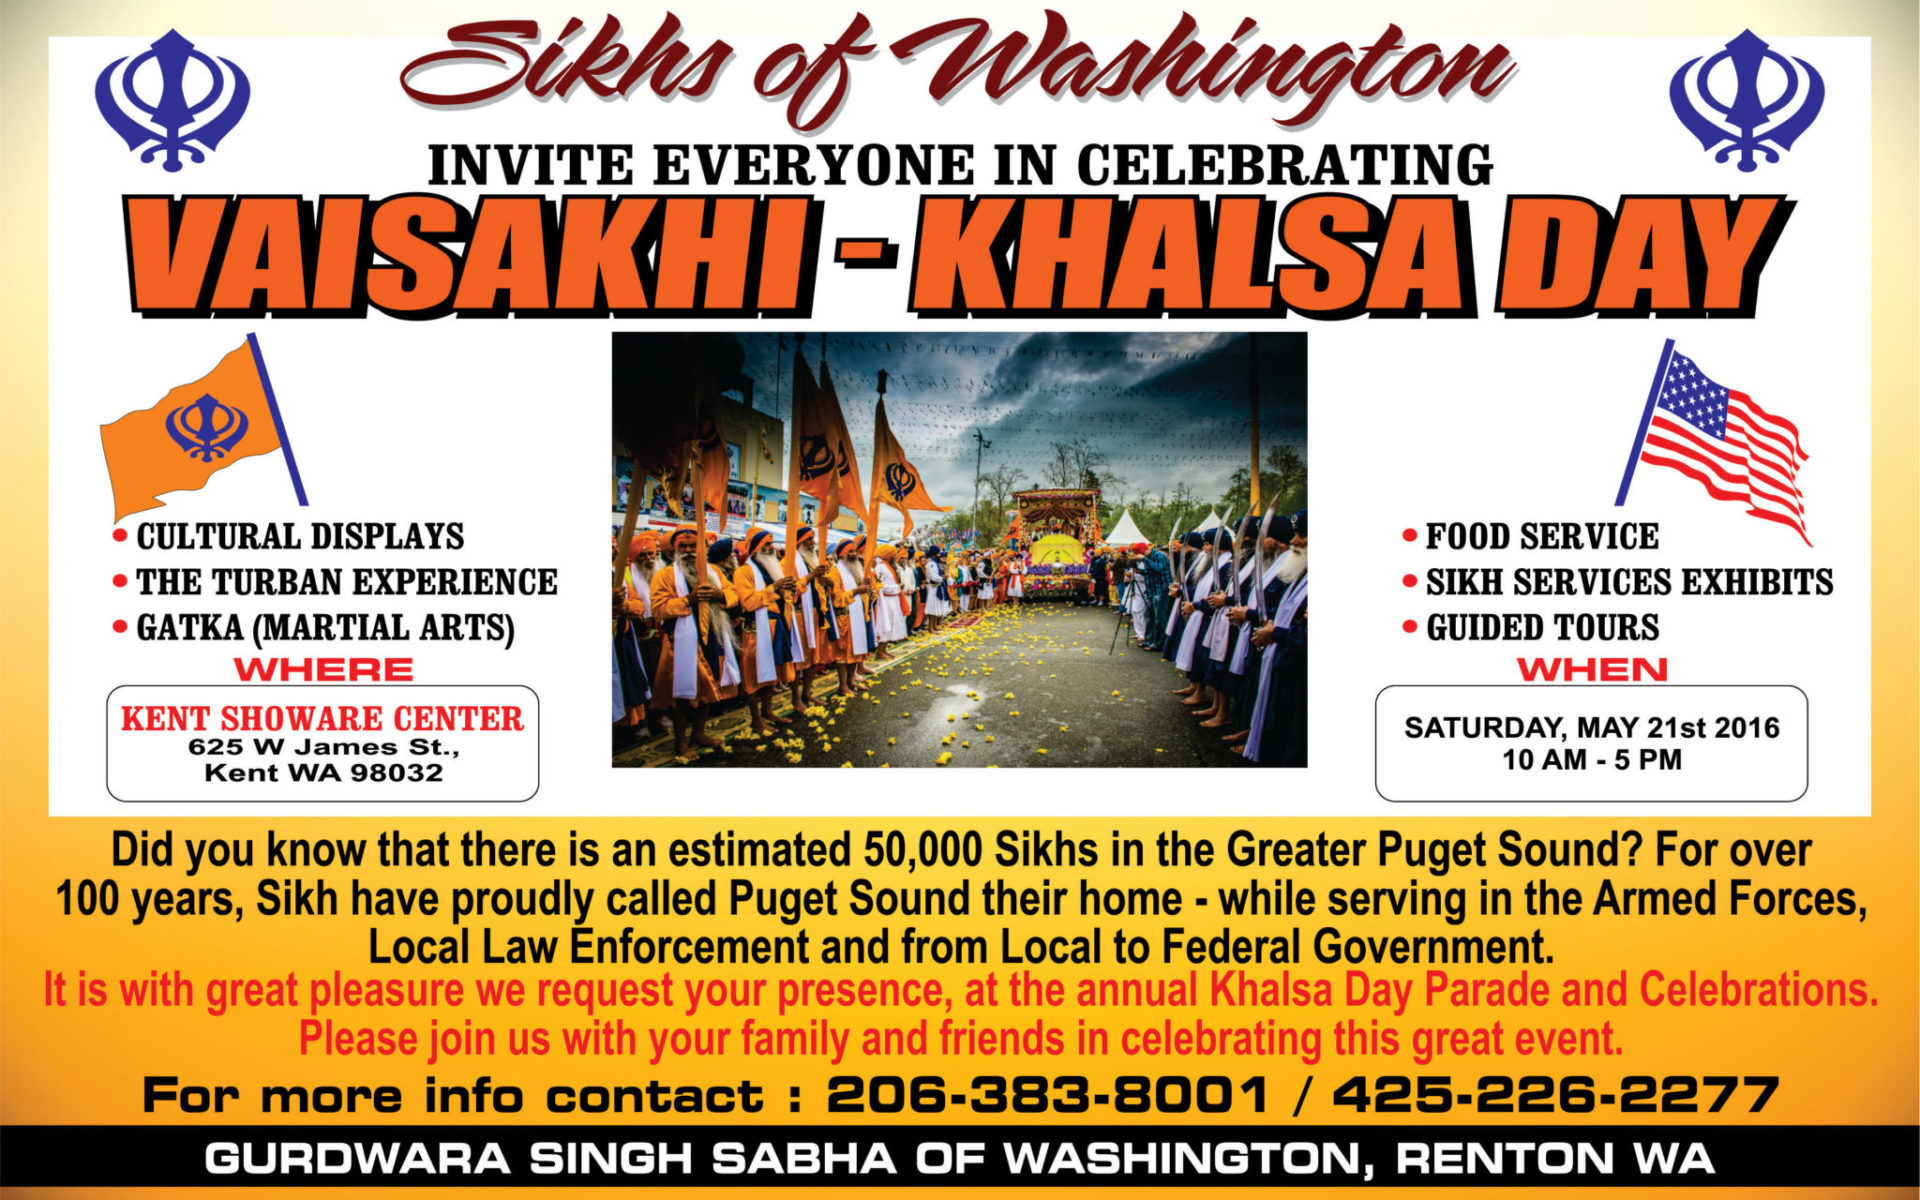 Sikhs of Washington Celebrate Vaisakhi-Khalsa Day, May 21, at ShoWare Center